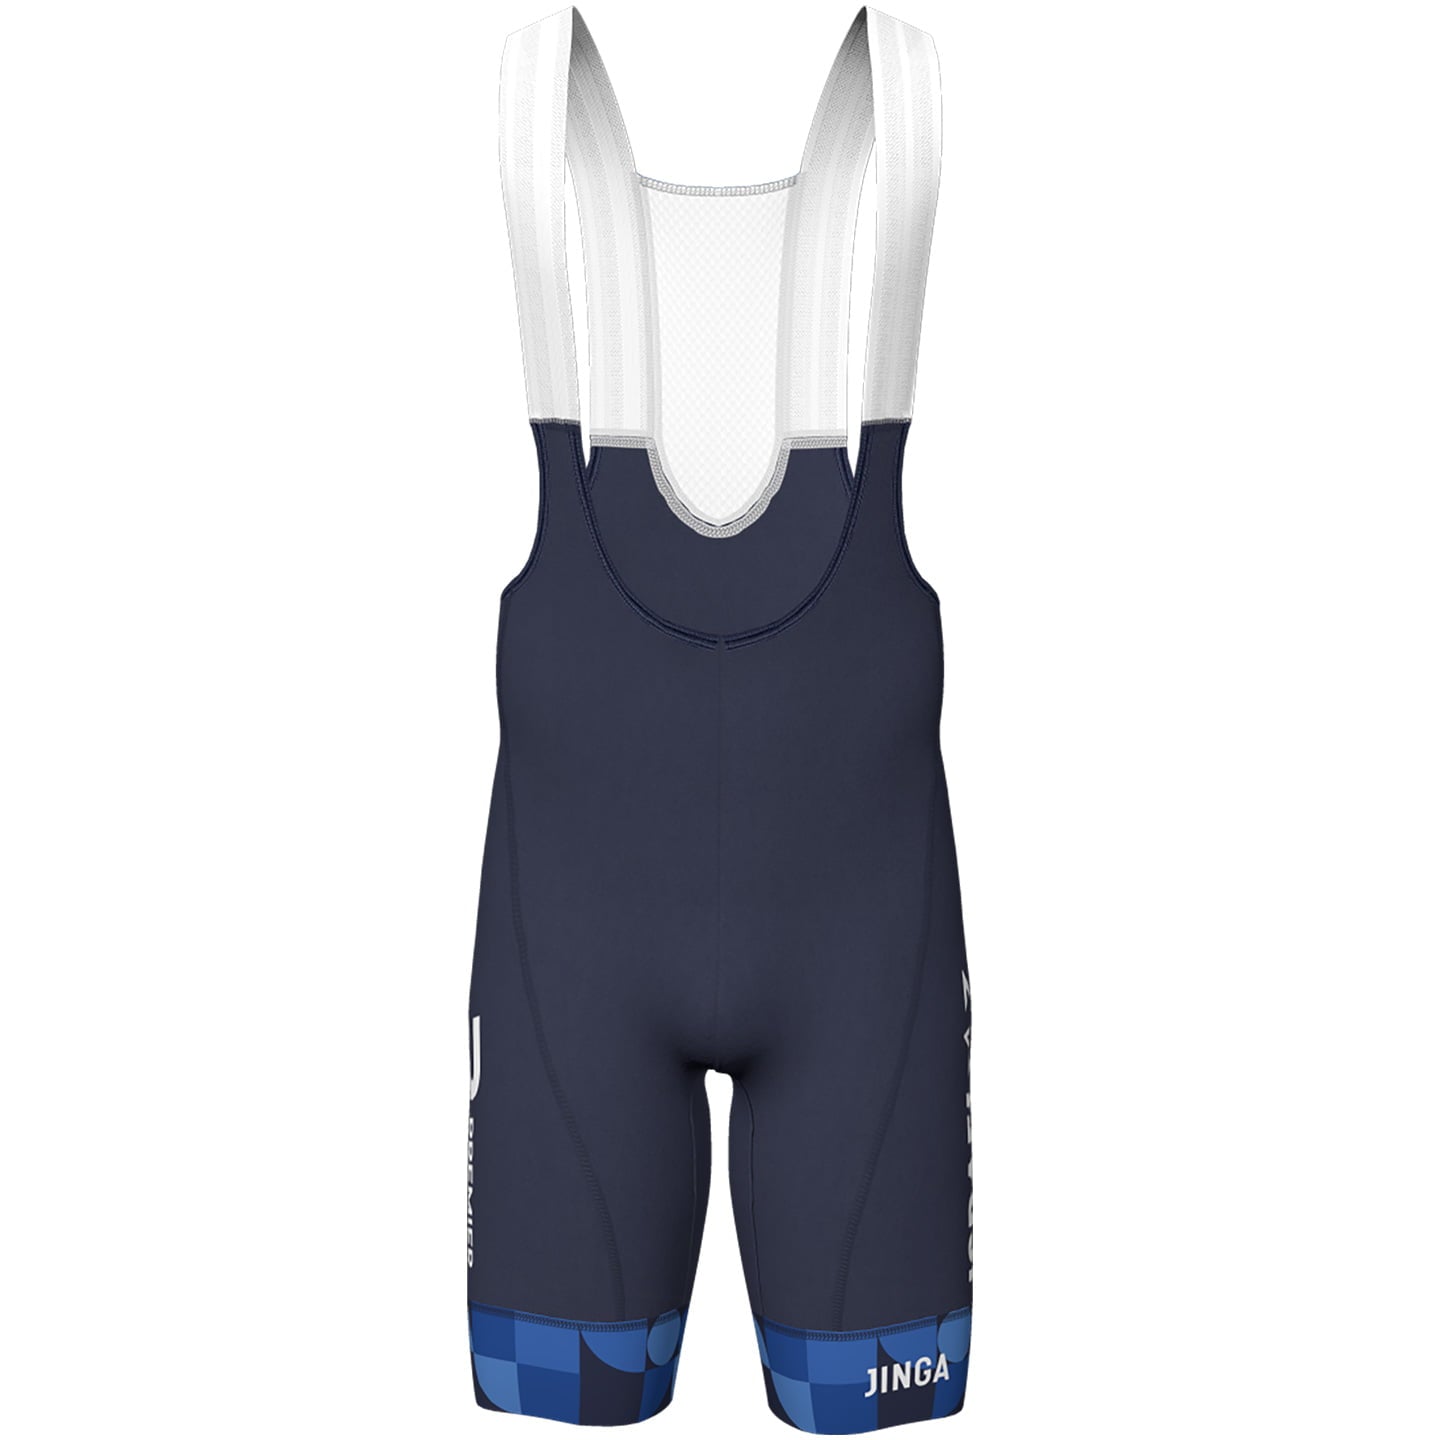 2022 Men's Breathable Short Sleeve Cycling Jersey (Bib) Shorts Israel Premier Tech-2022-001-AC